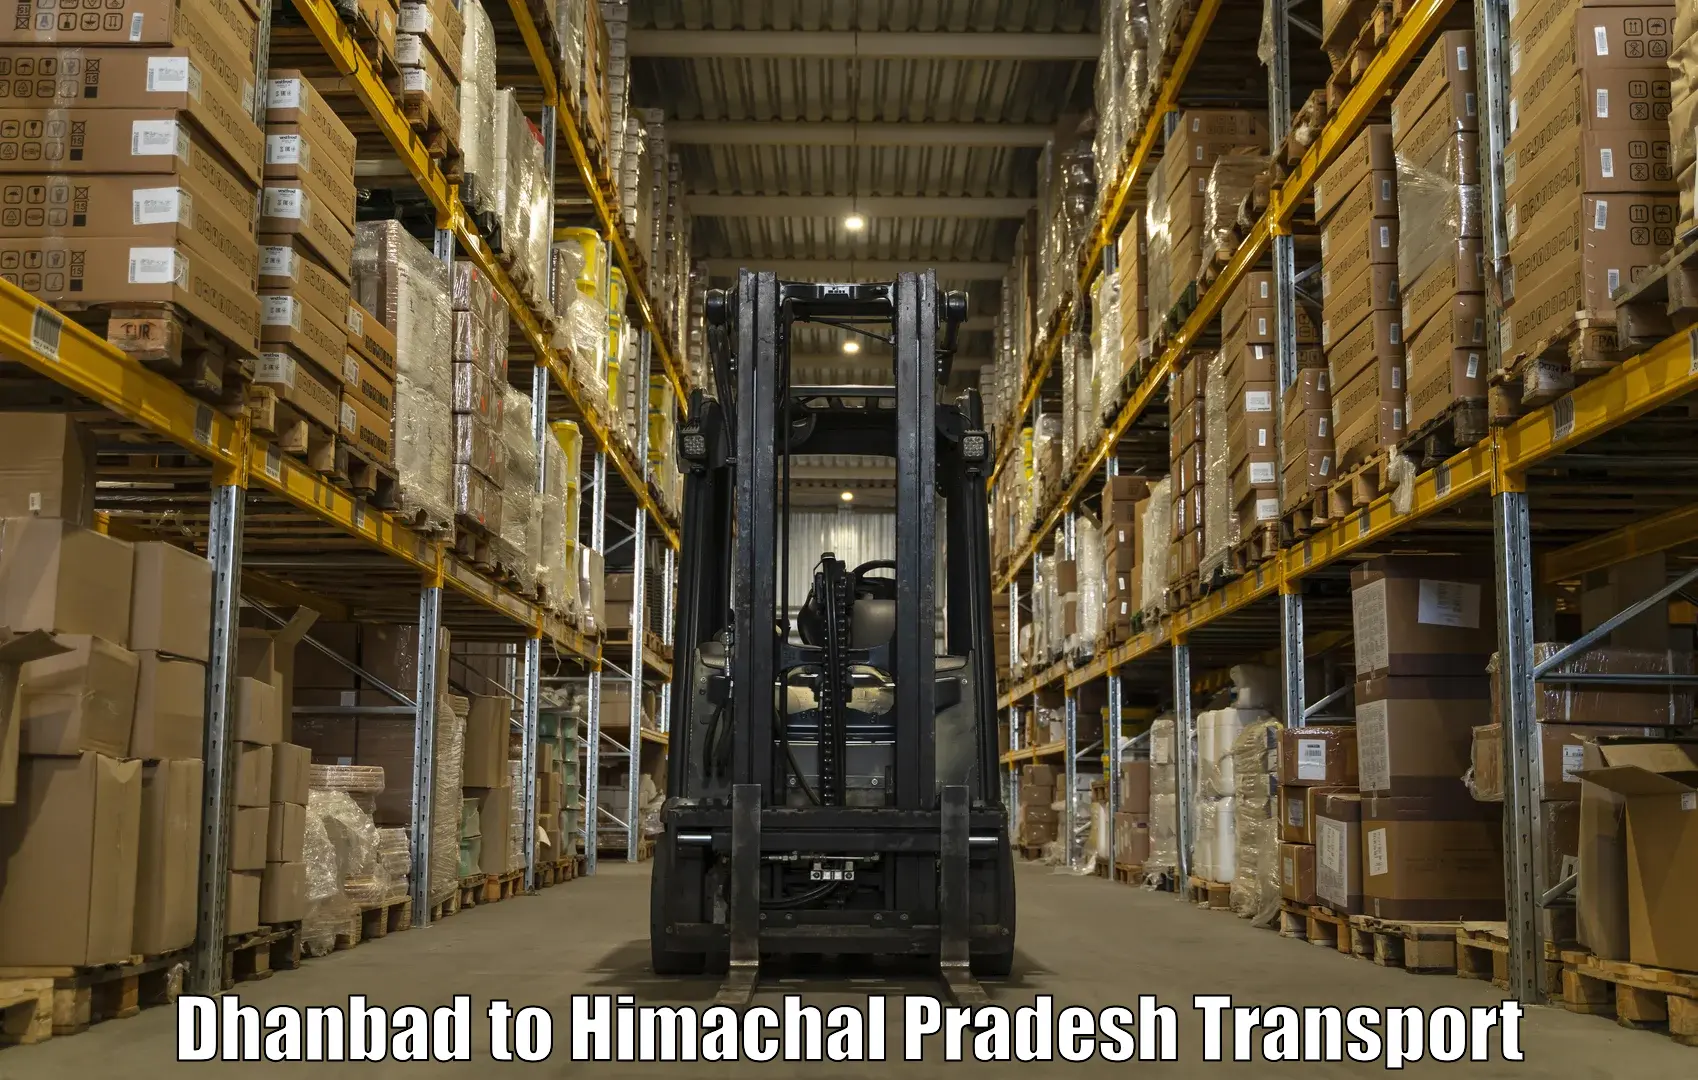 Truck transport companies in India Dhanbad to Sundar Nagar